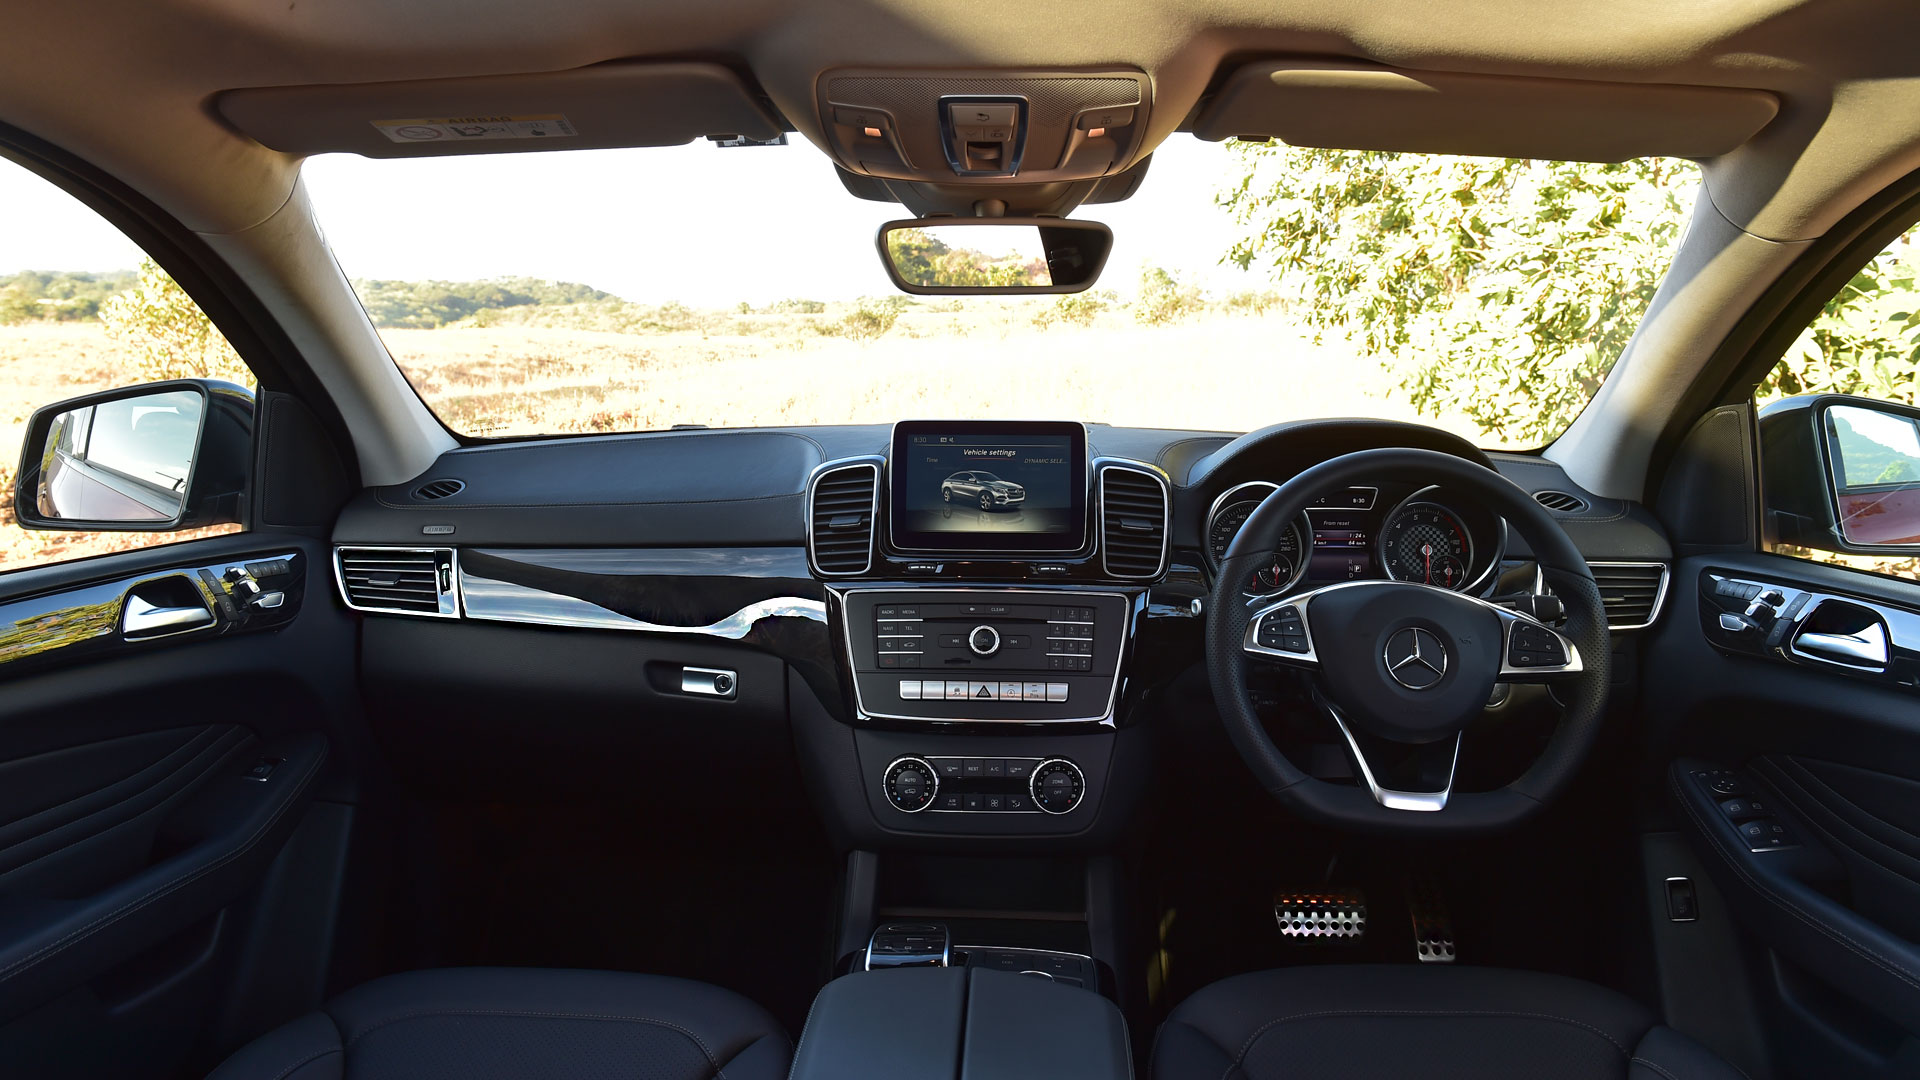 Mercedes Benz GLE 2016 450 AMG Coupe Interior